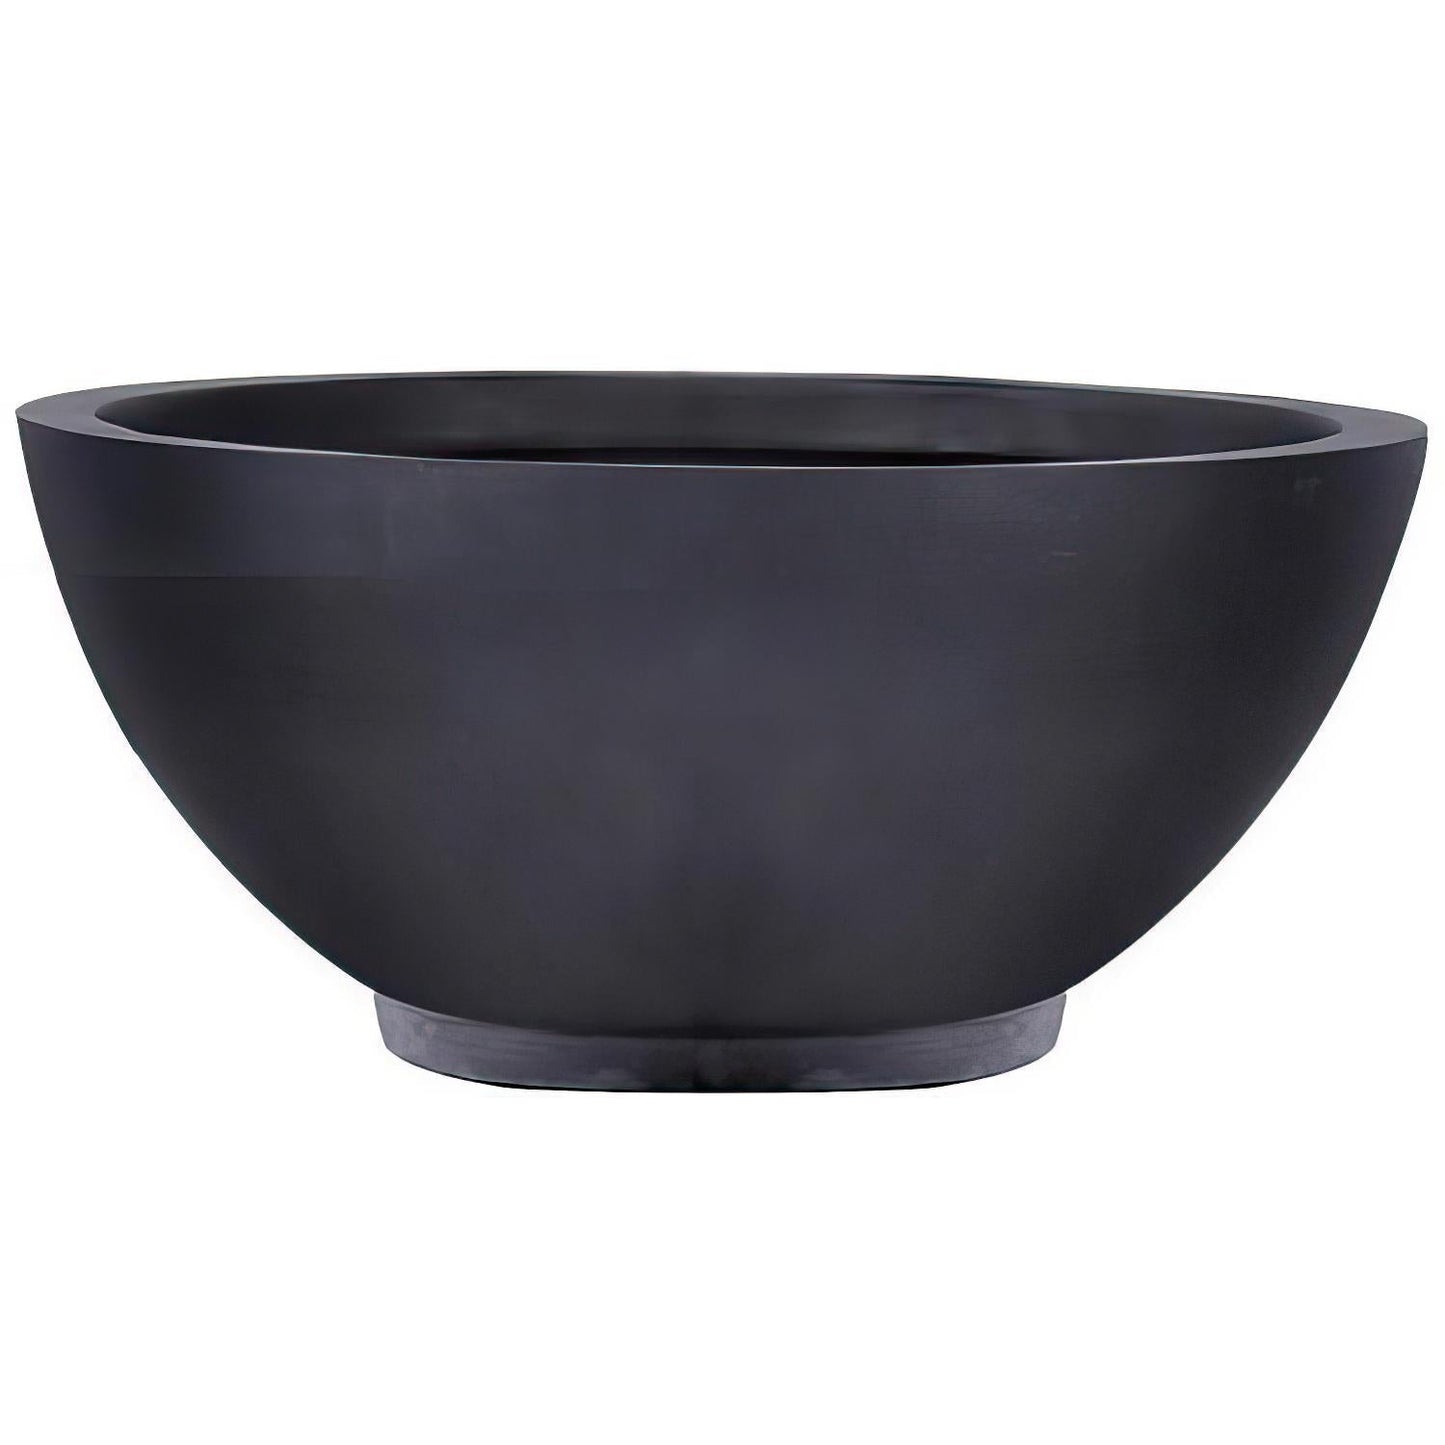 Black Dish Style Smooth Bowl Outdoor Planter by Idealist Lite D35.5 H16 cm, 15.8L - citiplants.com